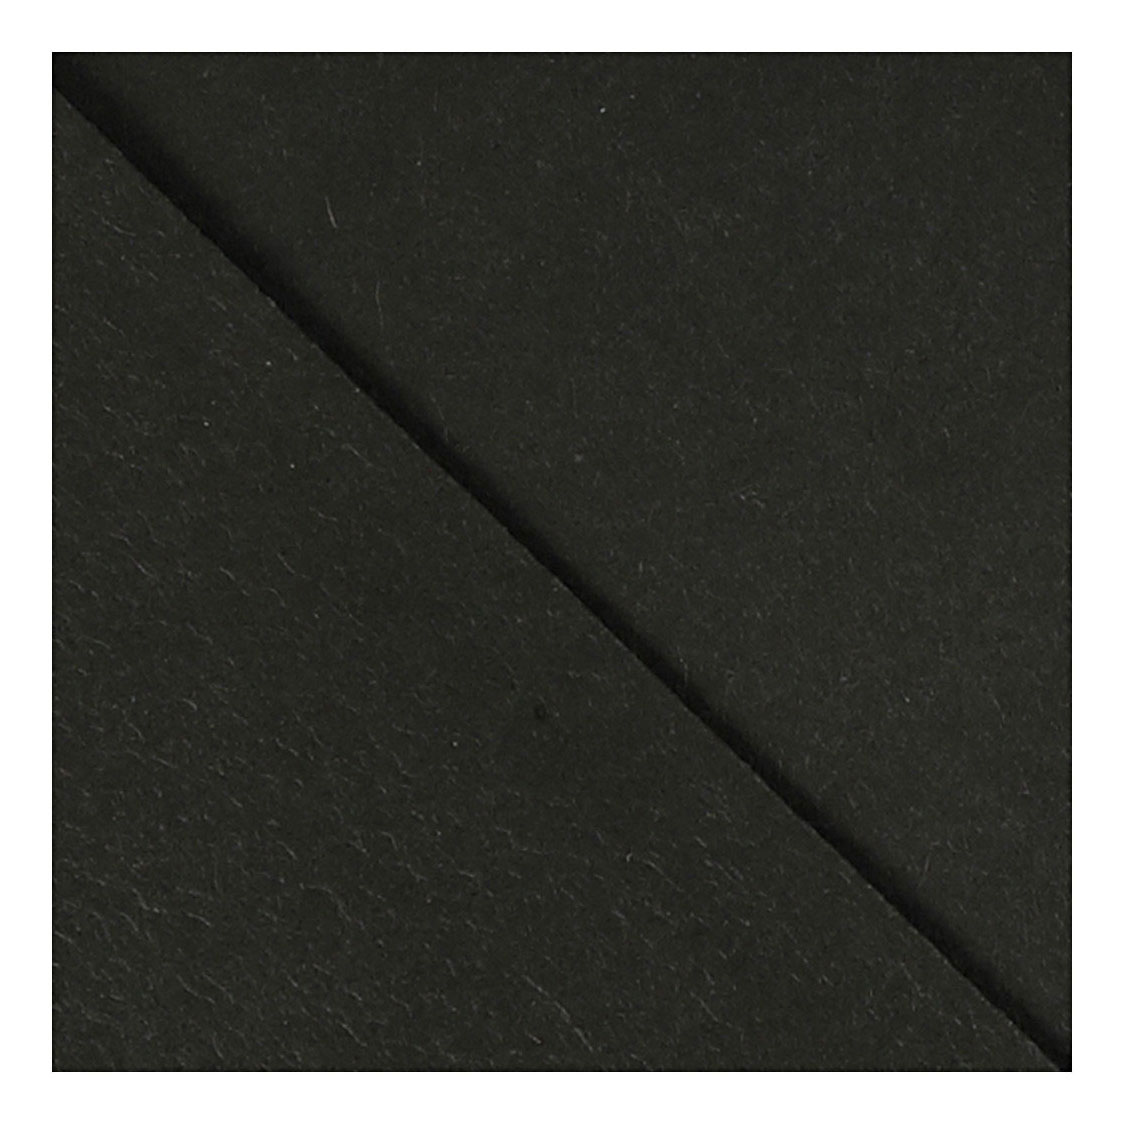 Enveloppe Noir, 11,5x15cm, 10 pcs.